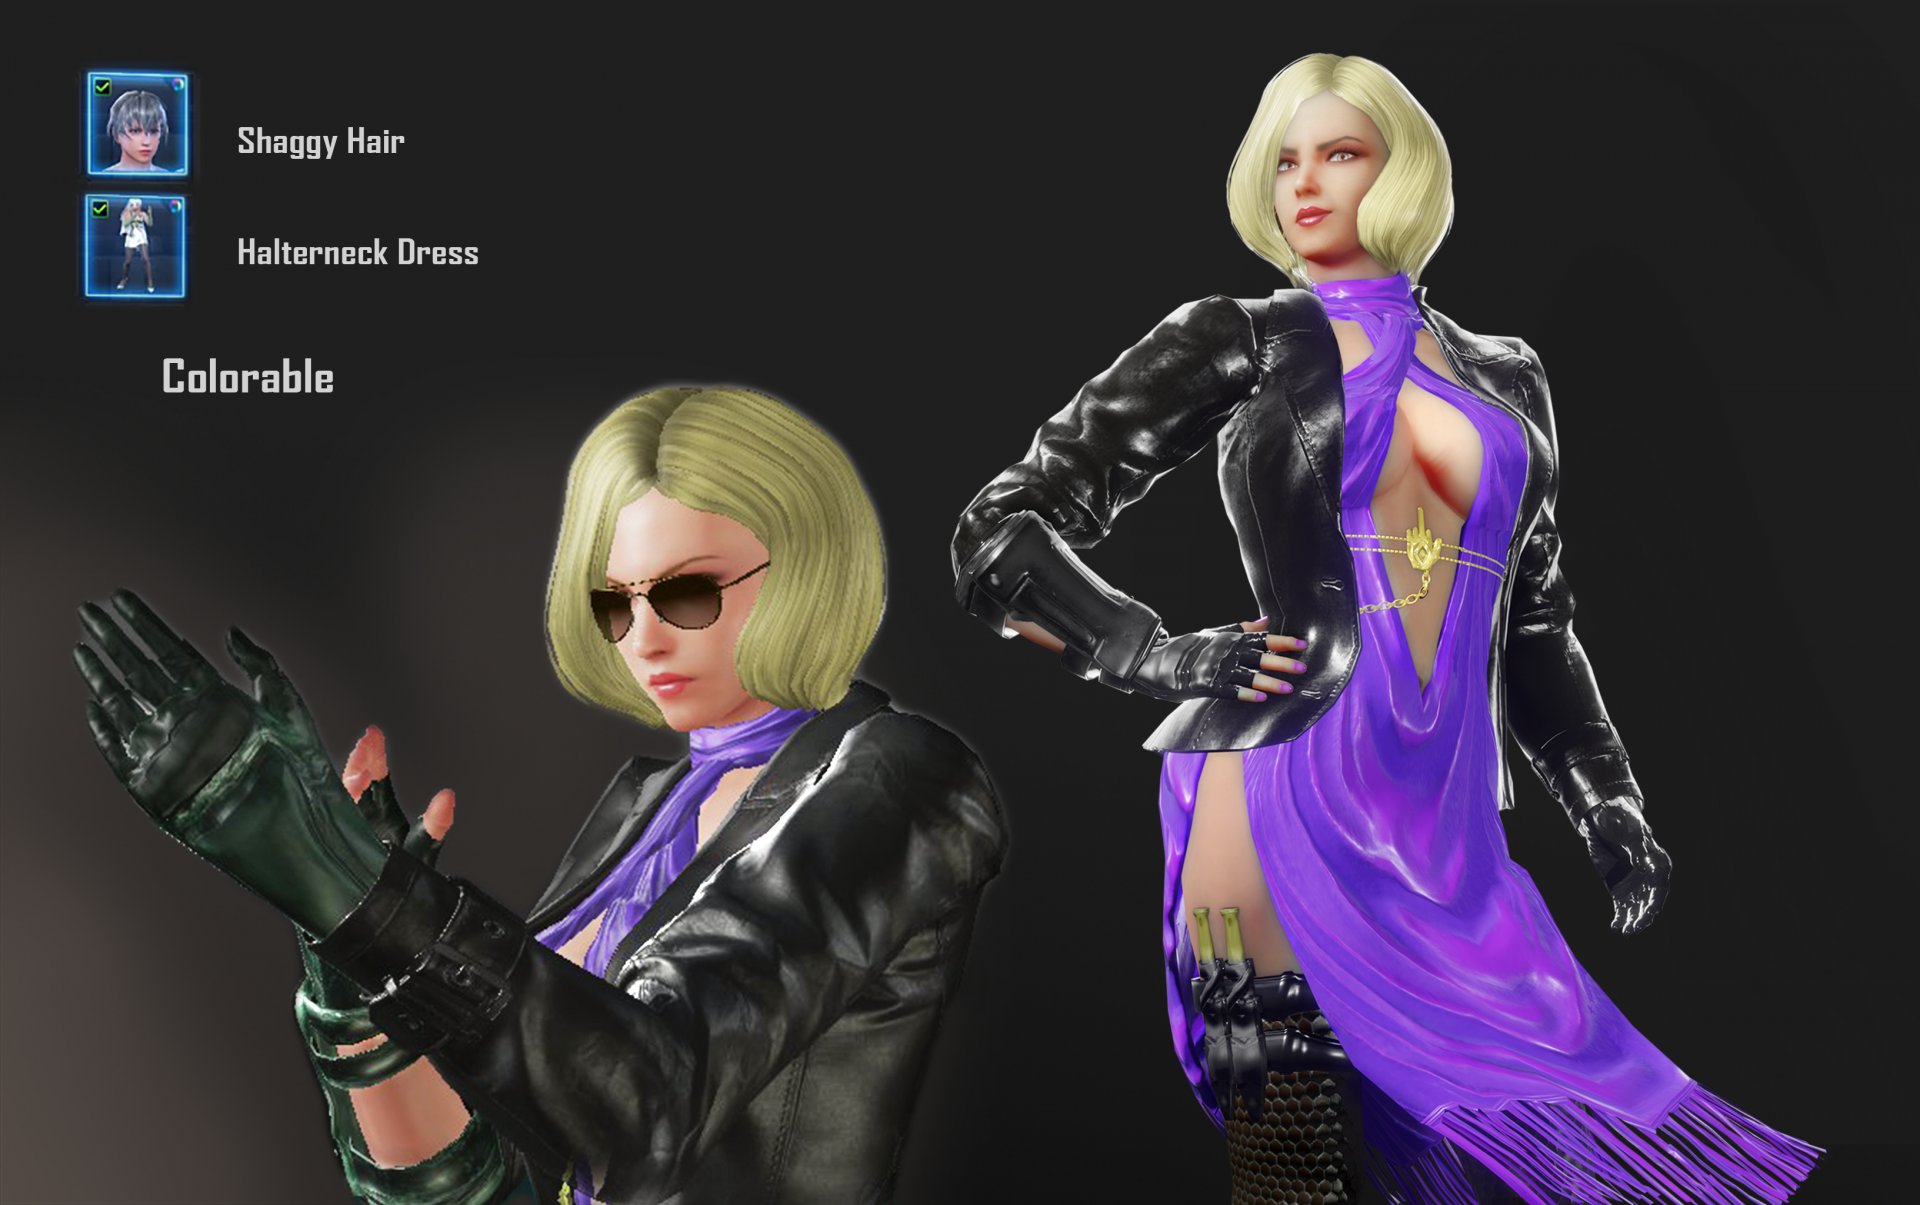 TekkenMods - Remake Tekken 8 Nina Williams Outfit and Hair